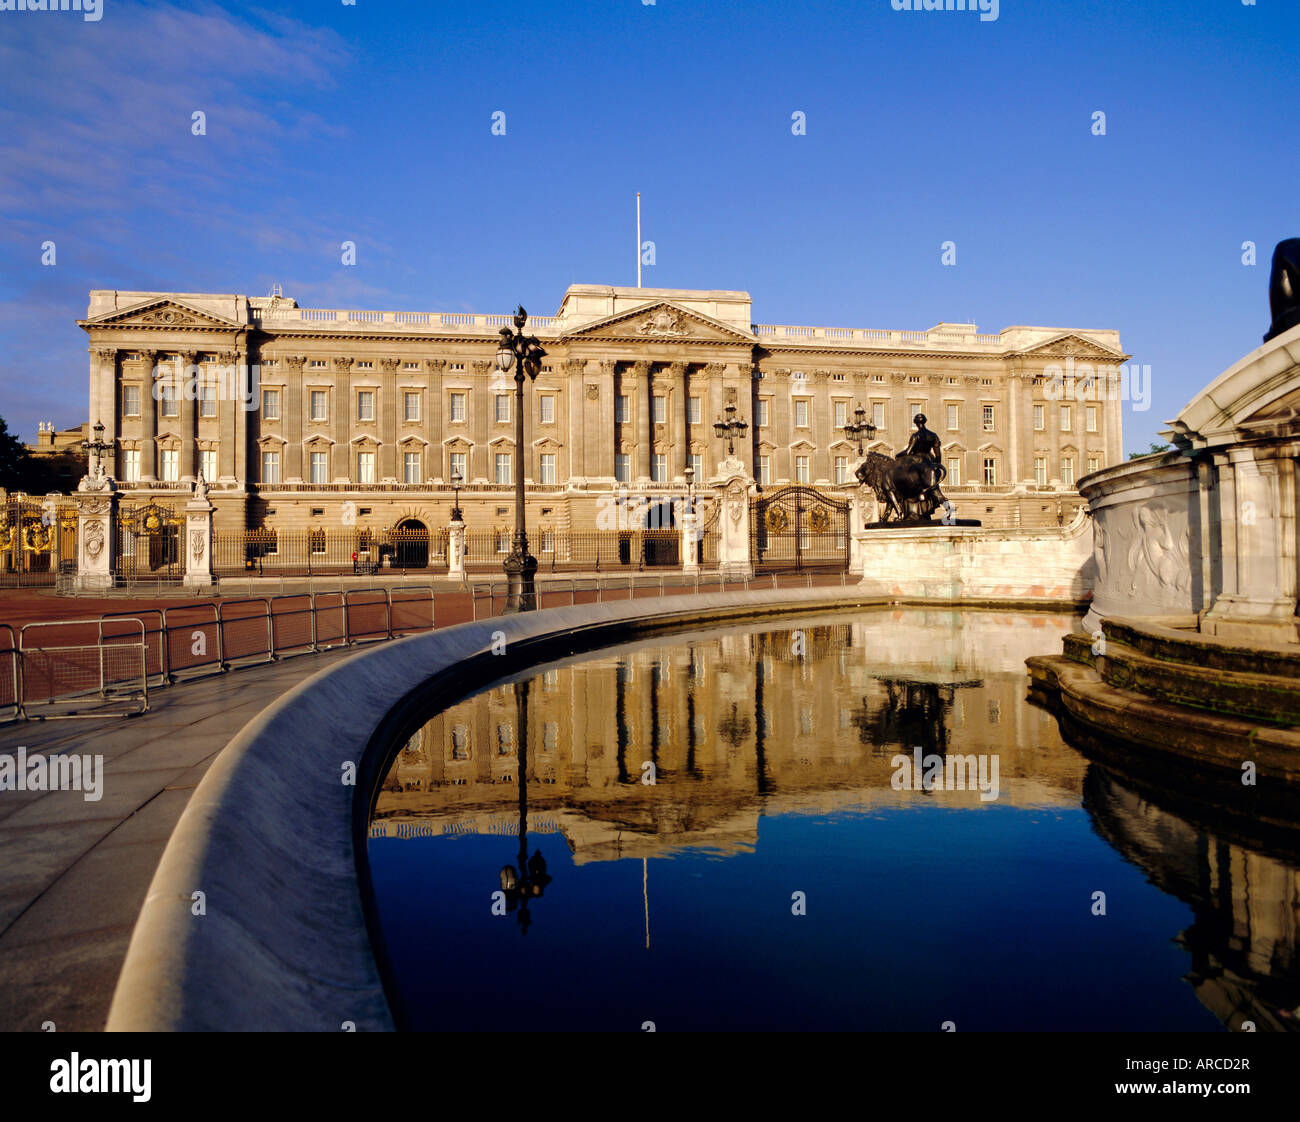 Buckingham Palace, London, England, UK Banque D'Images